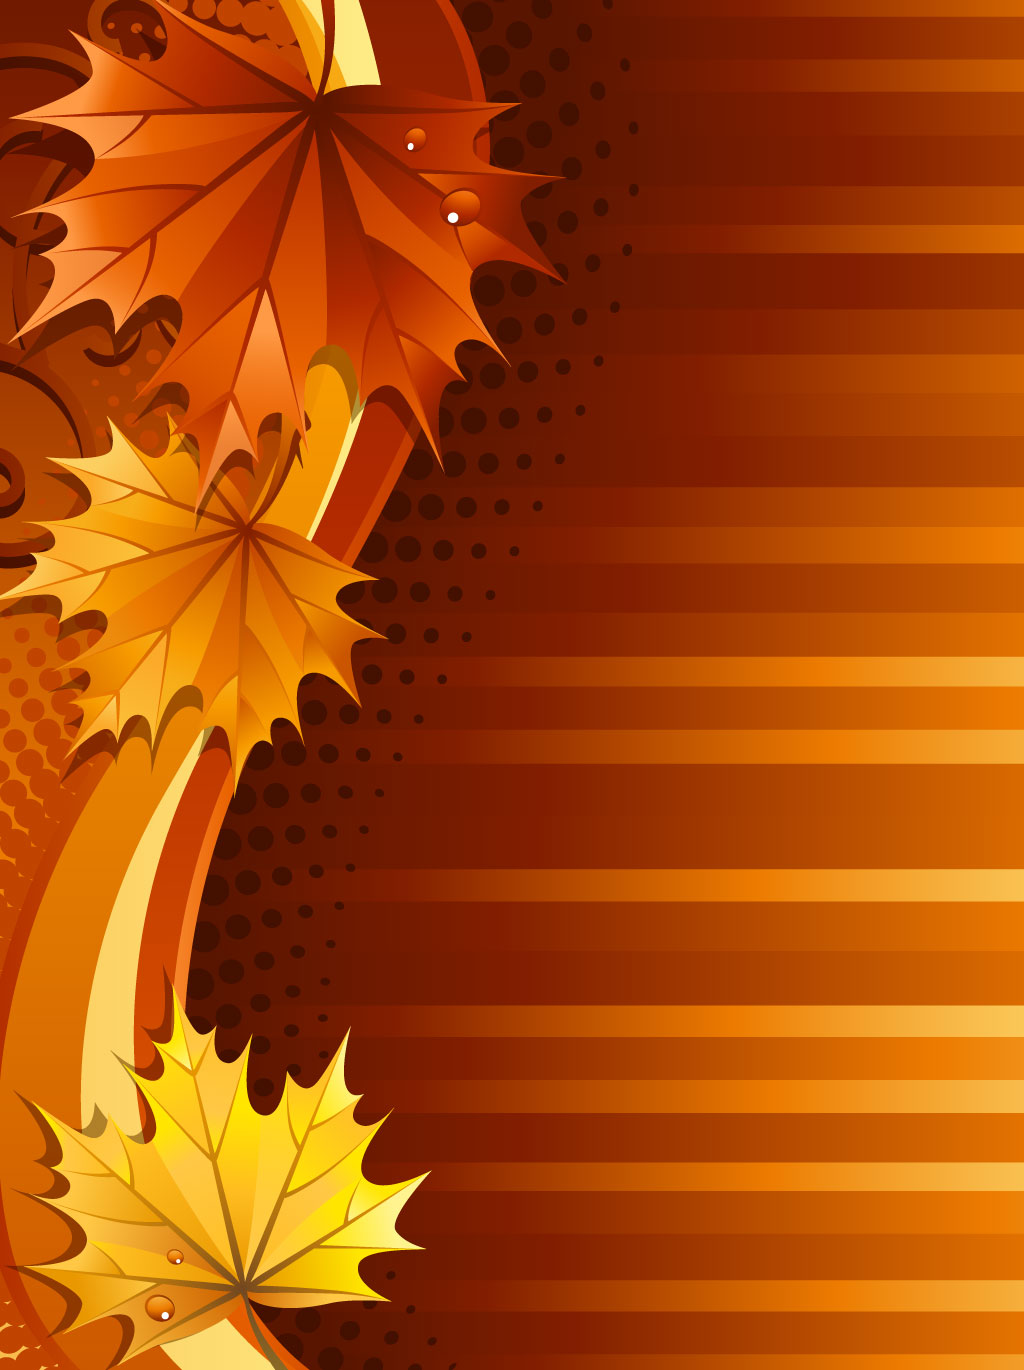 Autumn Leaf Background Vector Art Graphics freevector com